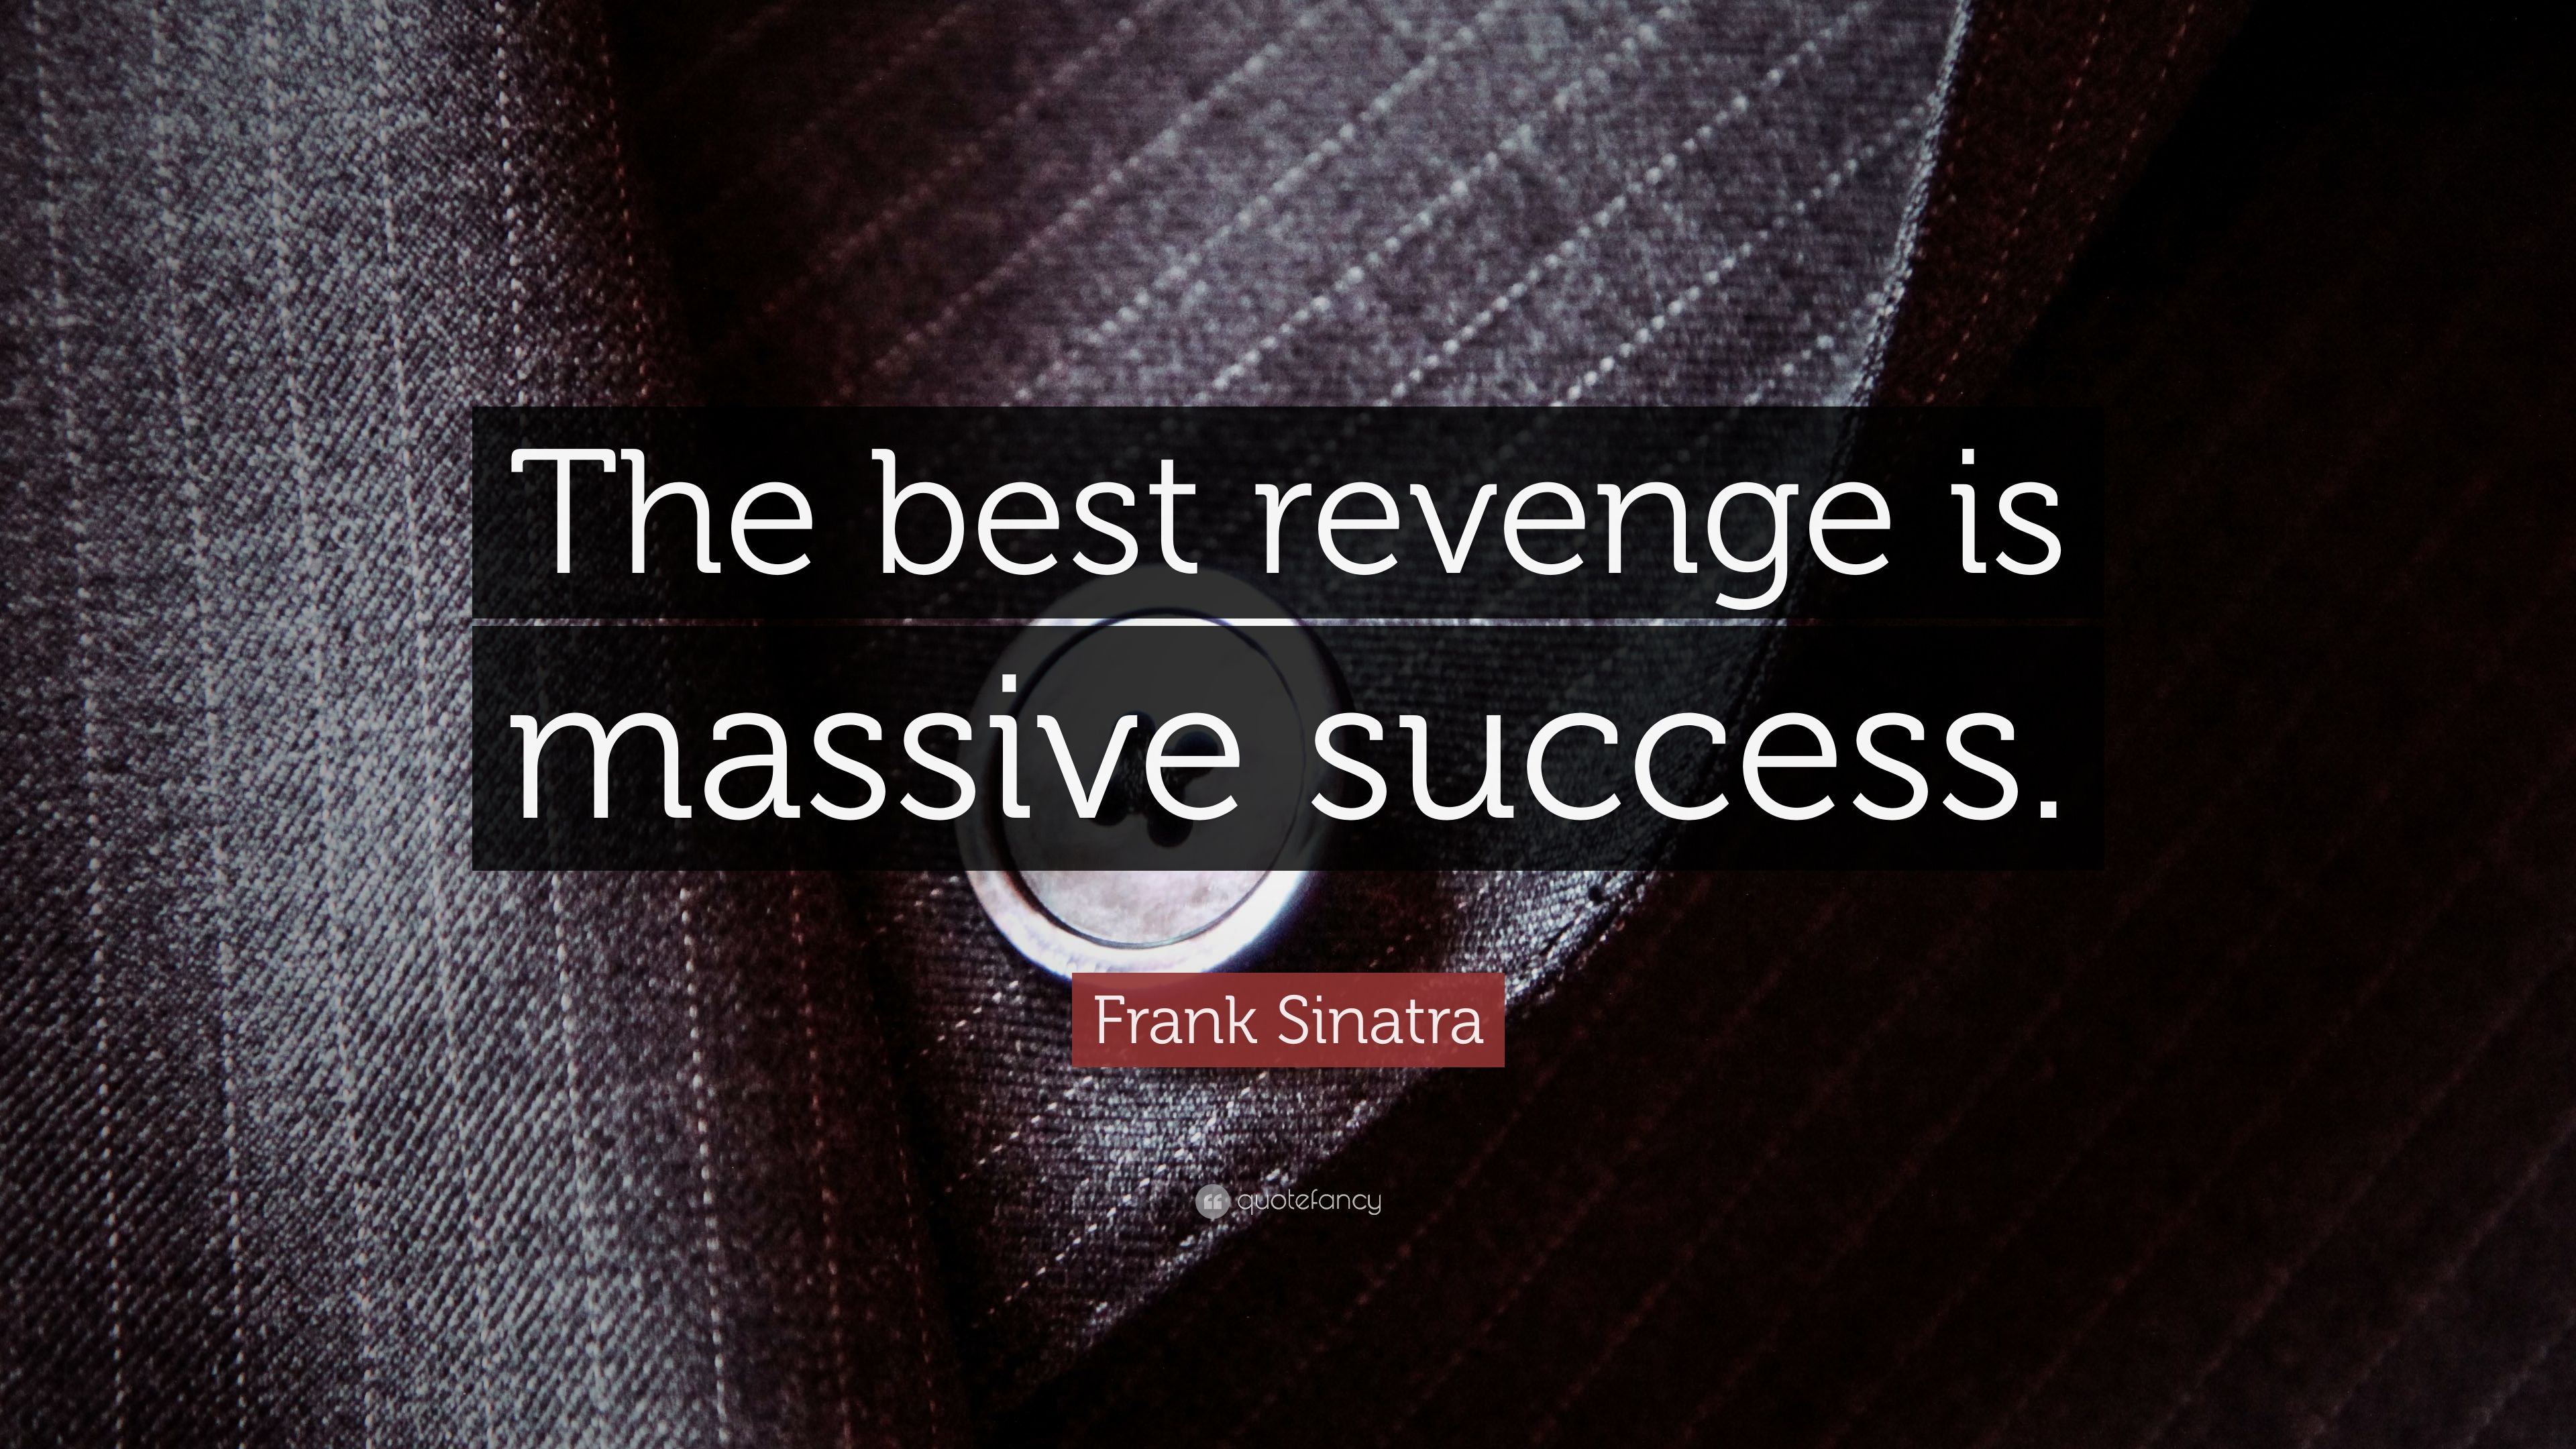 Frank Sinatra Quote: “The best revenge is massive success.” 18